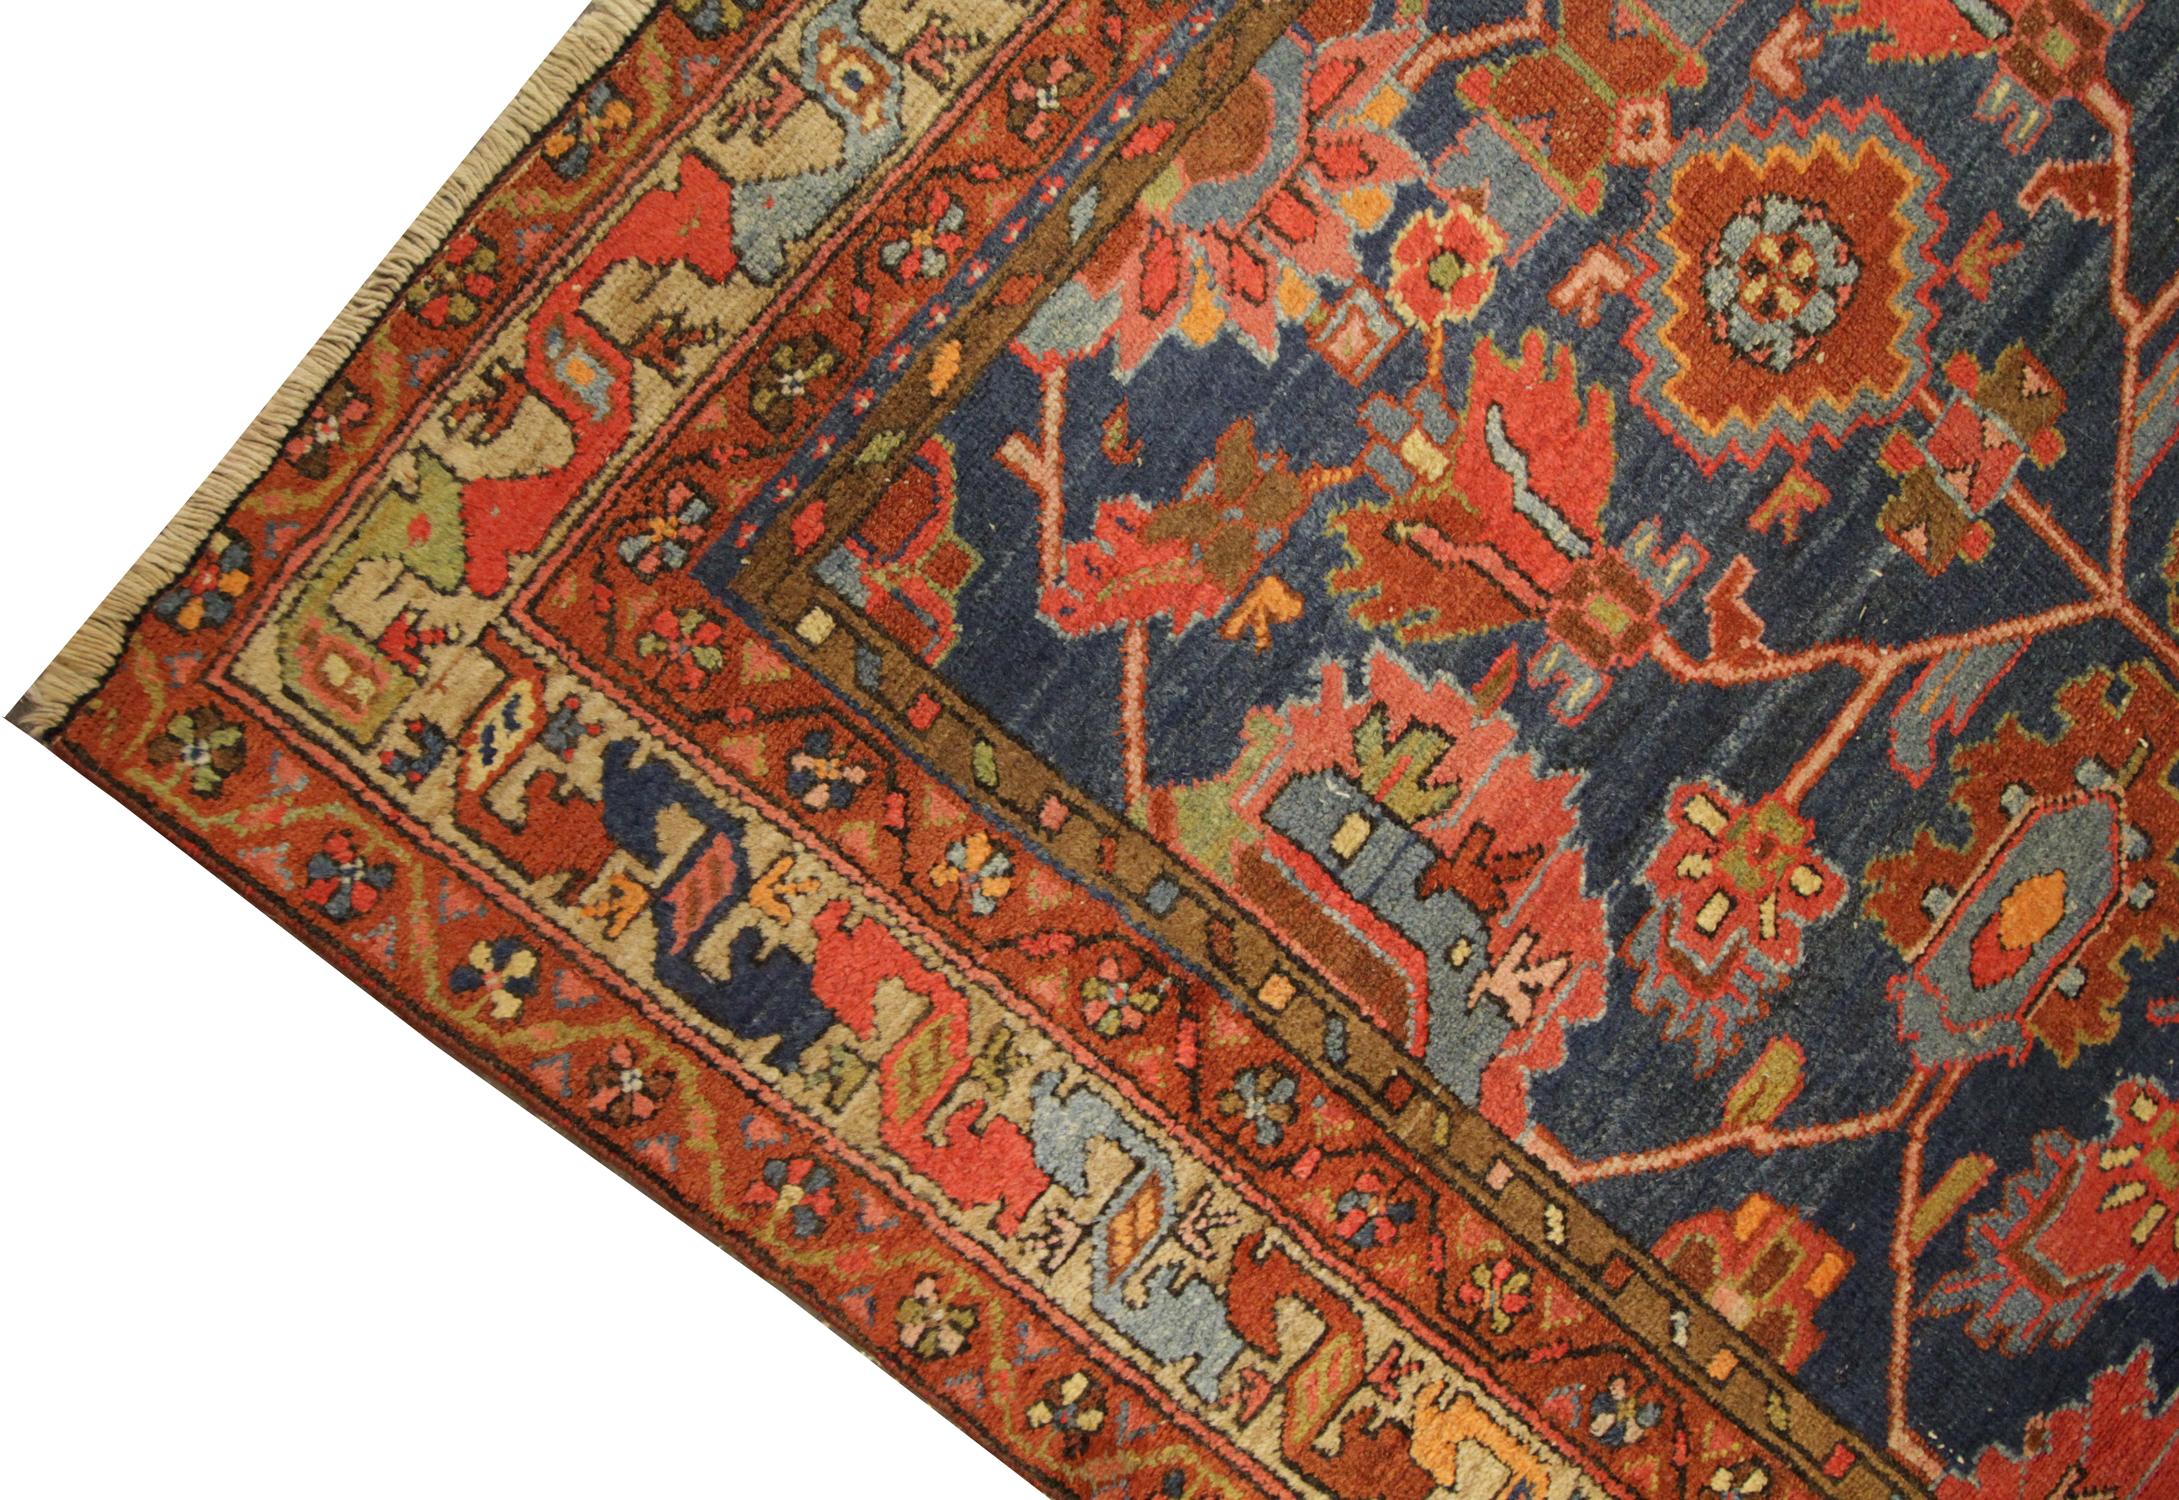 Hollywood Regency Antique Caucasian Carpet Handmade All Over Design Living Room Rug CHR79 For Sale